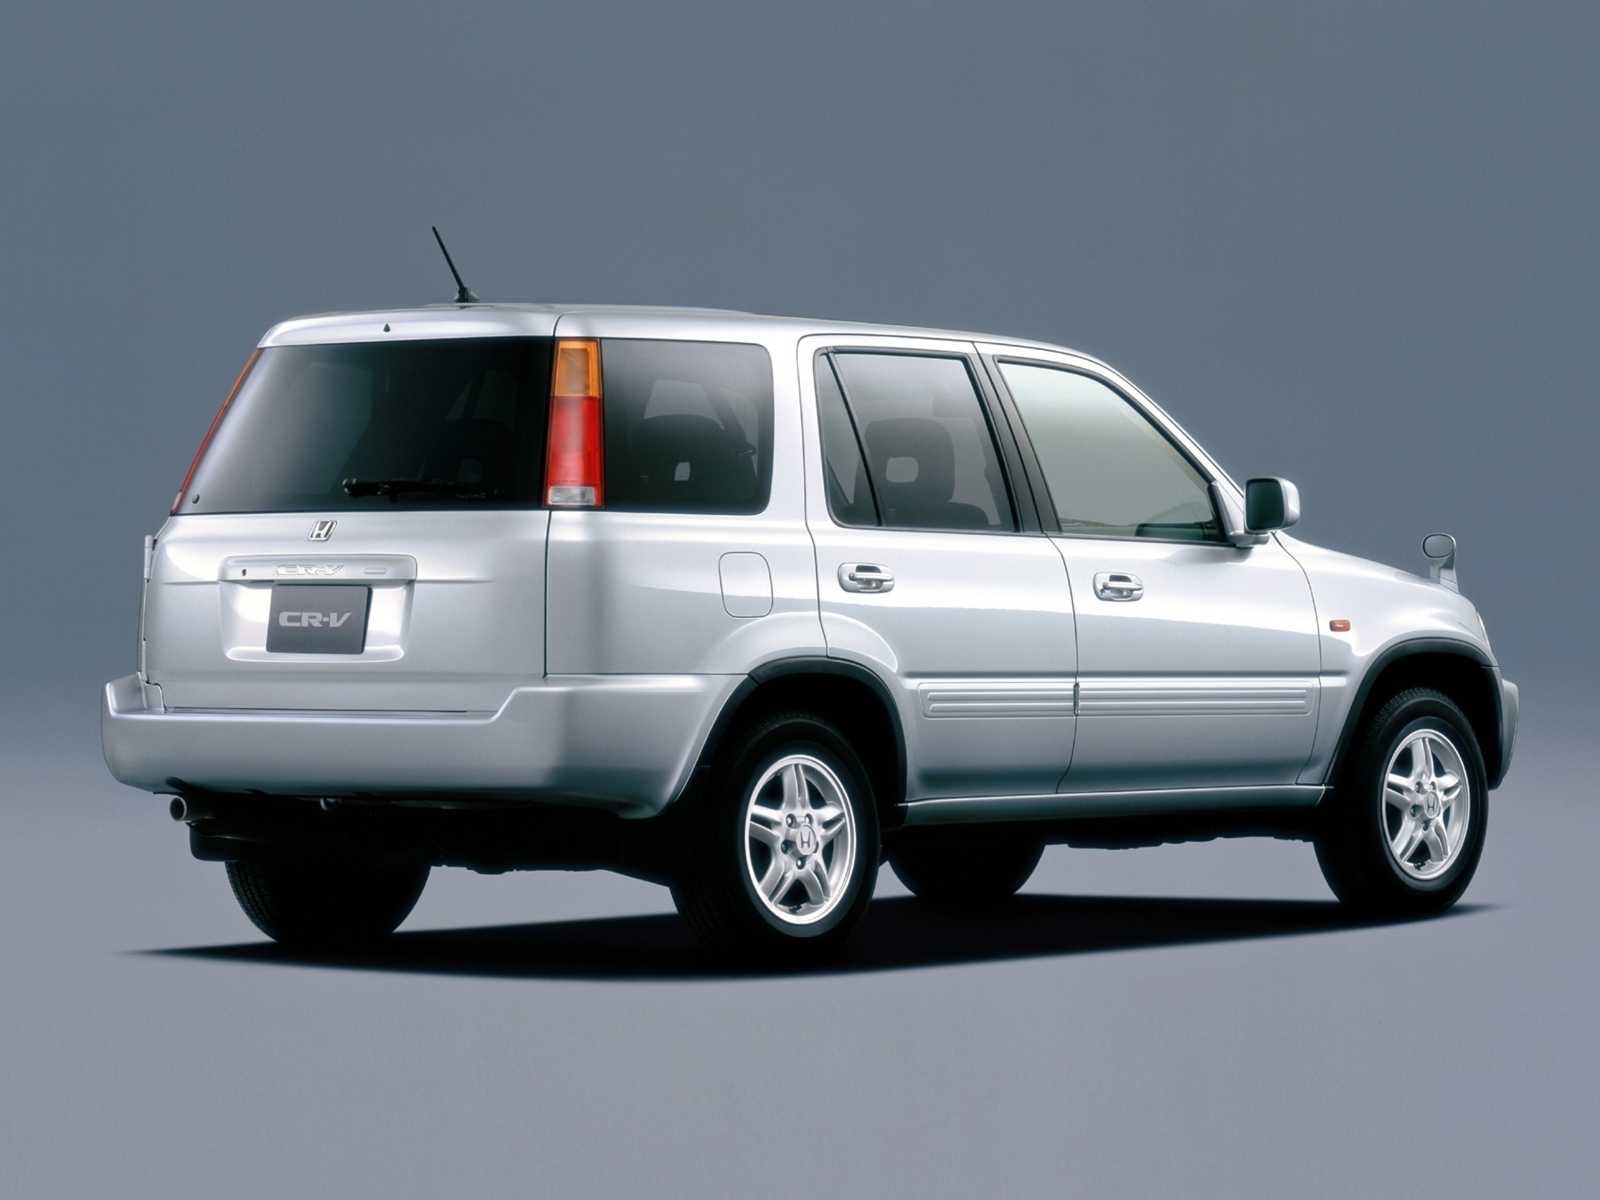 Honda crv 1 купить. Хонда CRV Rd 1 поколение. Honda CR-V rd1 1999. Хонда СРВ 1 поколения. Honda CR-V rd1 2001.